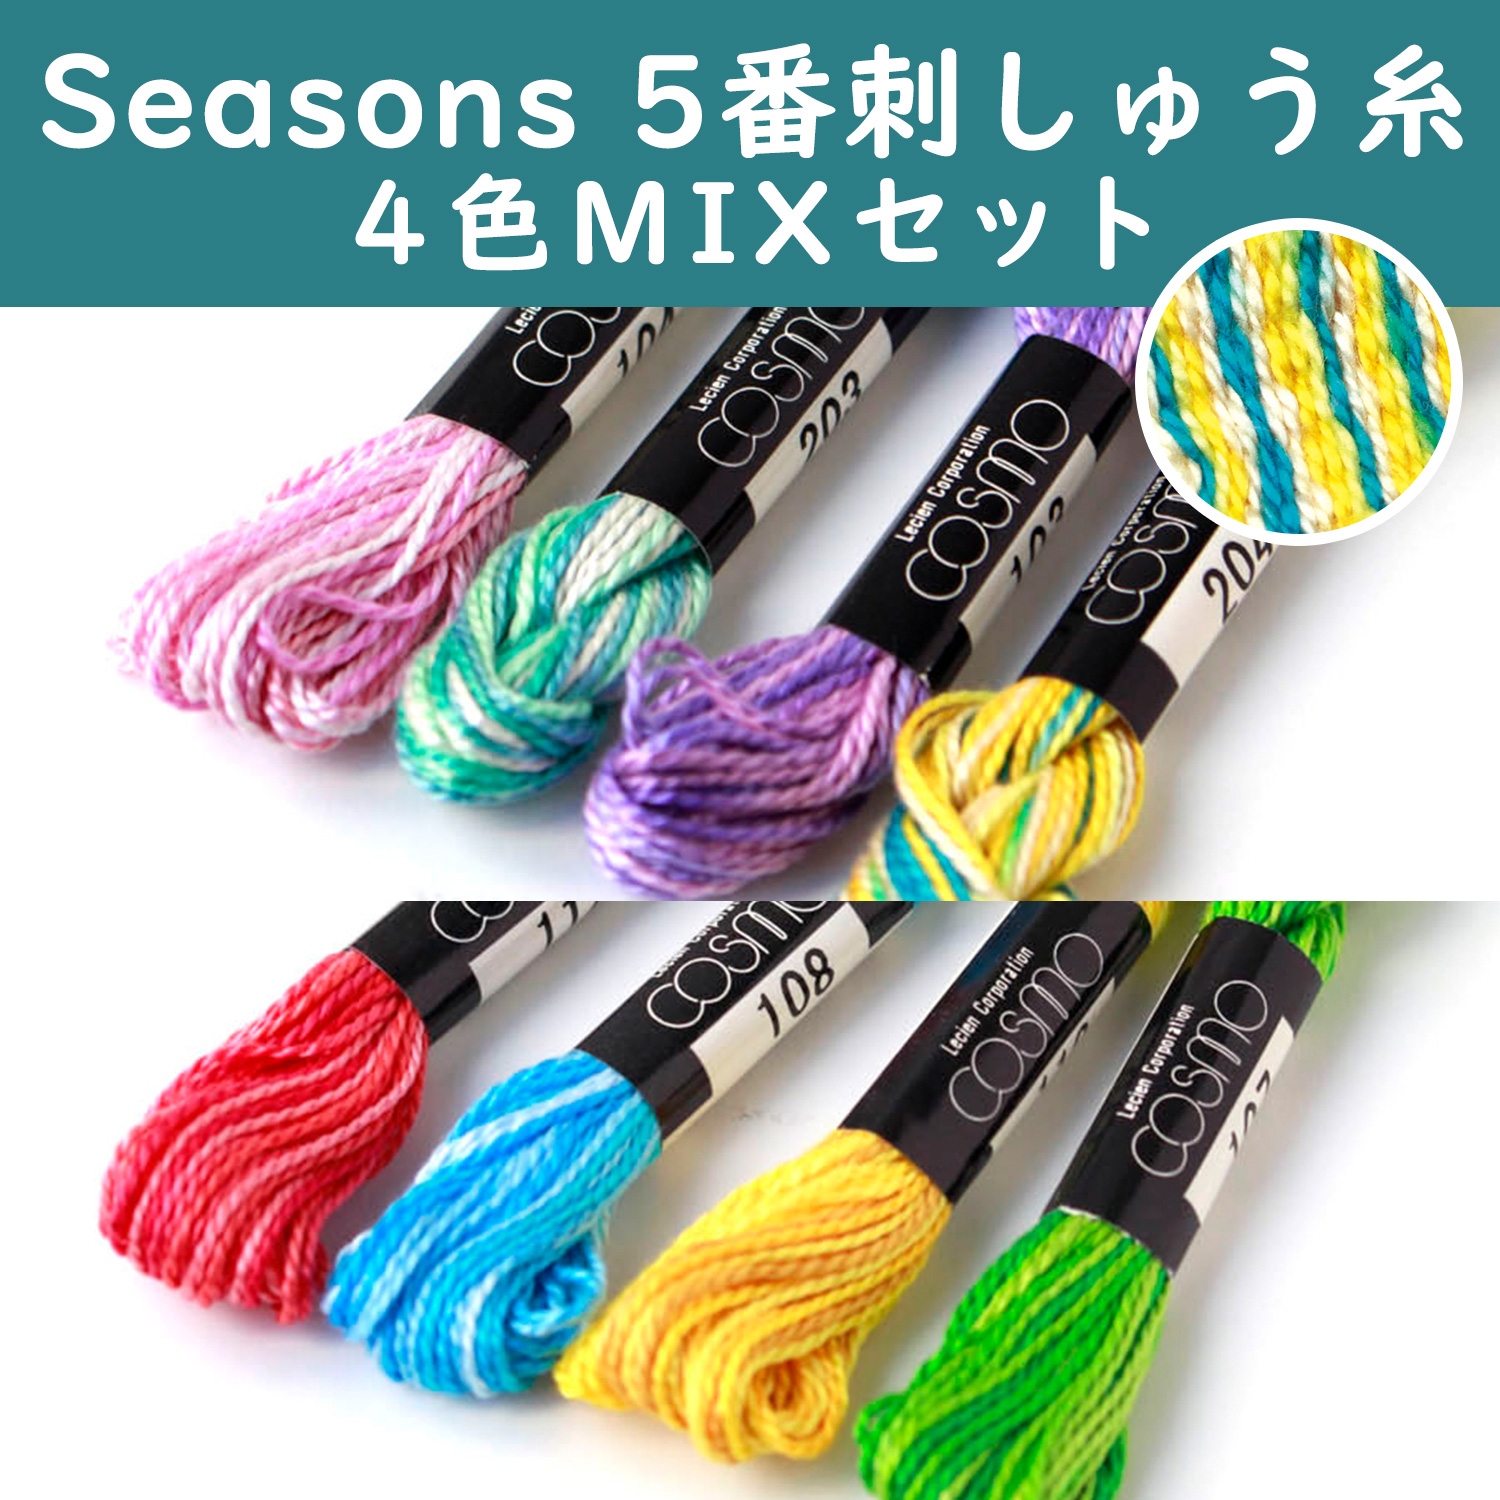 CS5S-MIX Seasons No. 5 embroidery thread MIX set of 5 colors each (set)